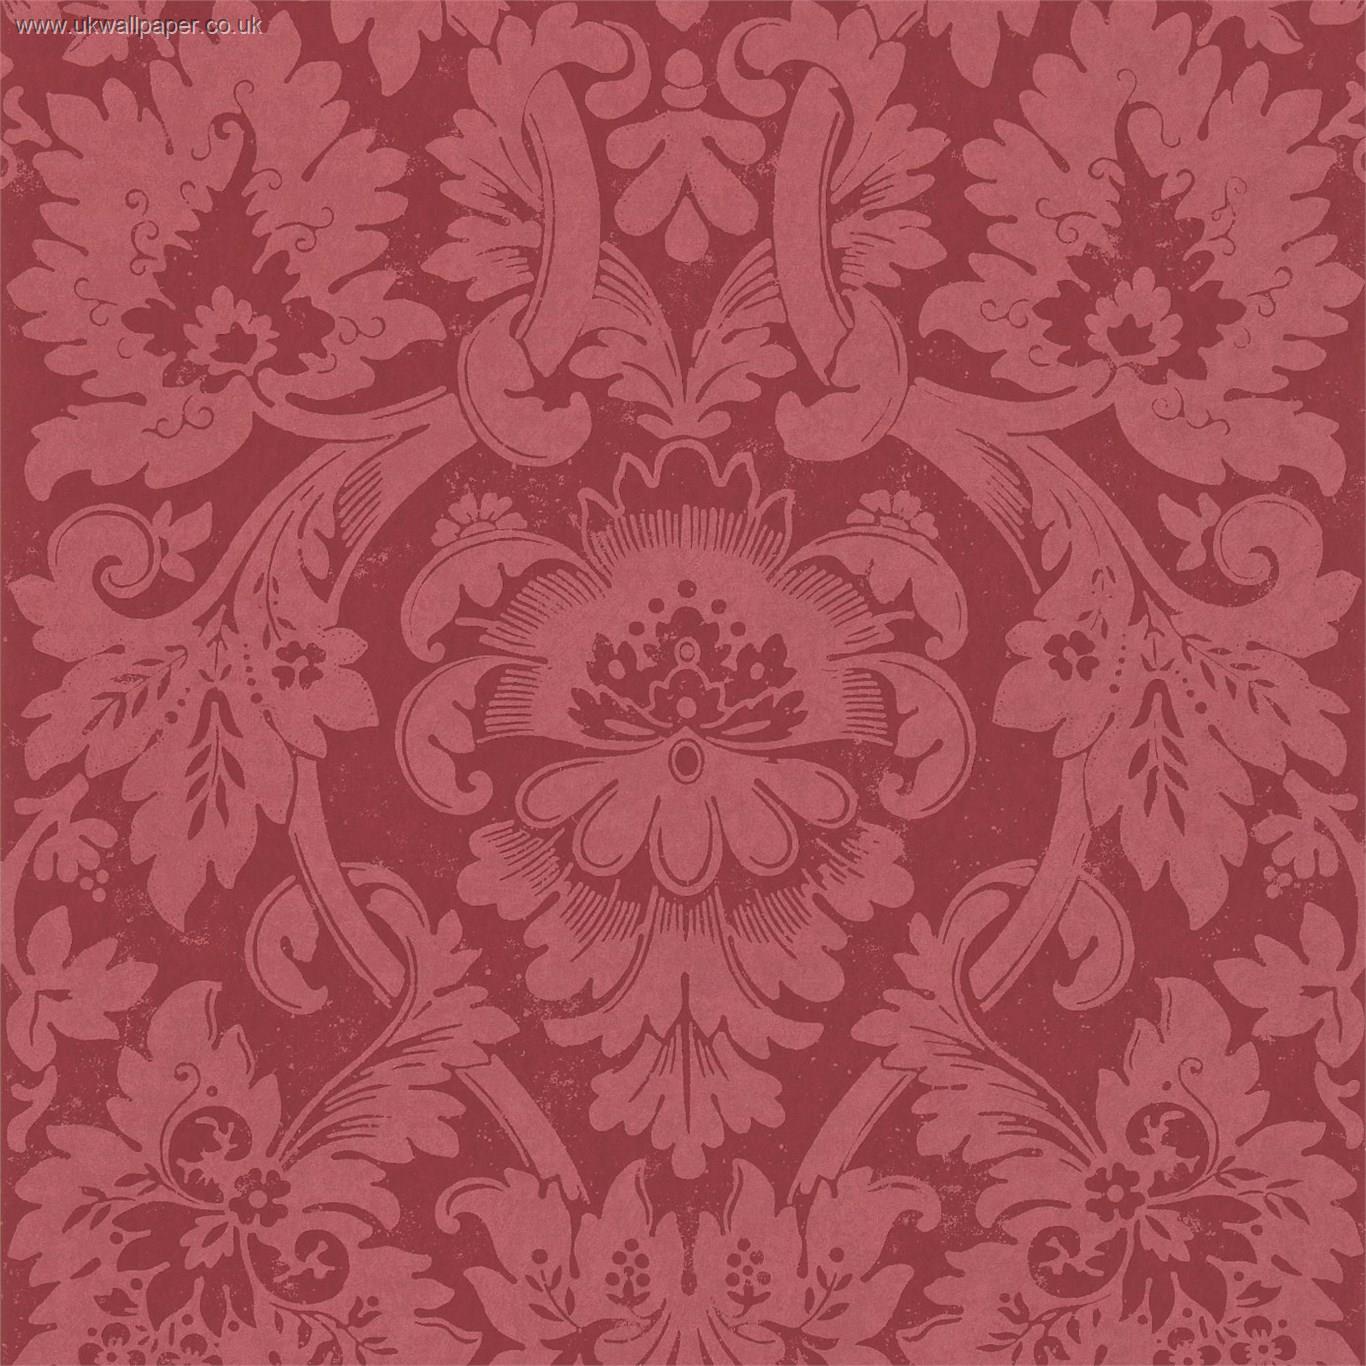 fabric wallpaper uk,pattern,red,pink,wallpaper,textile